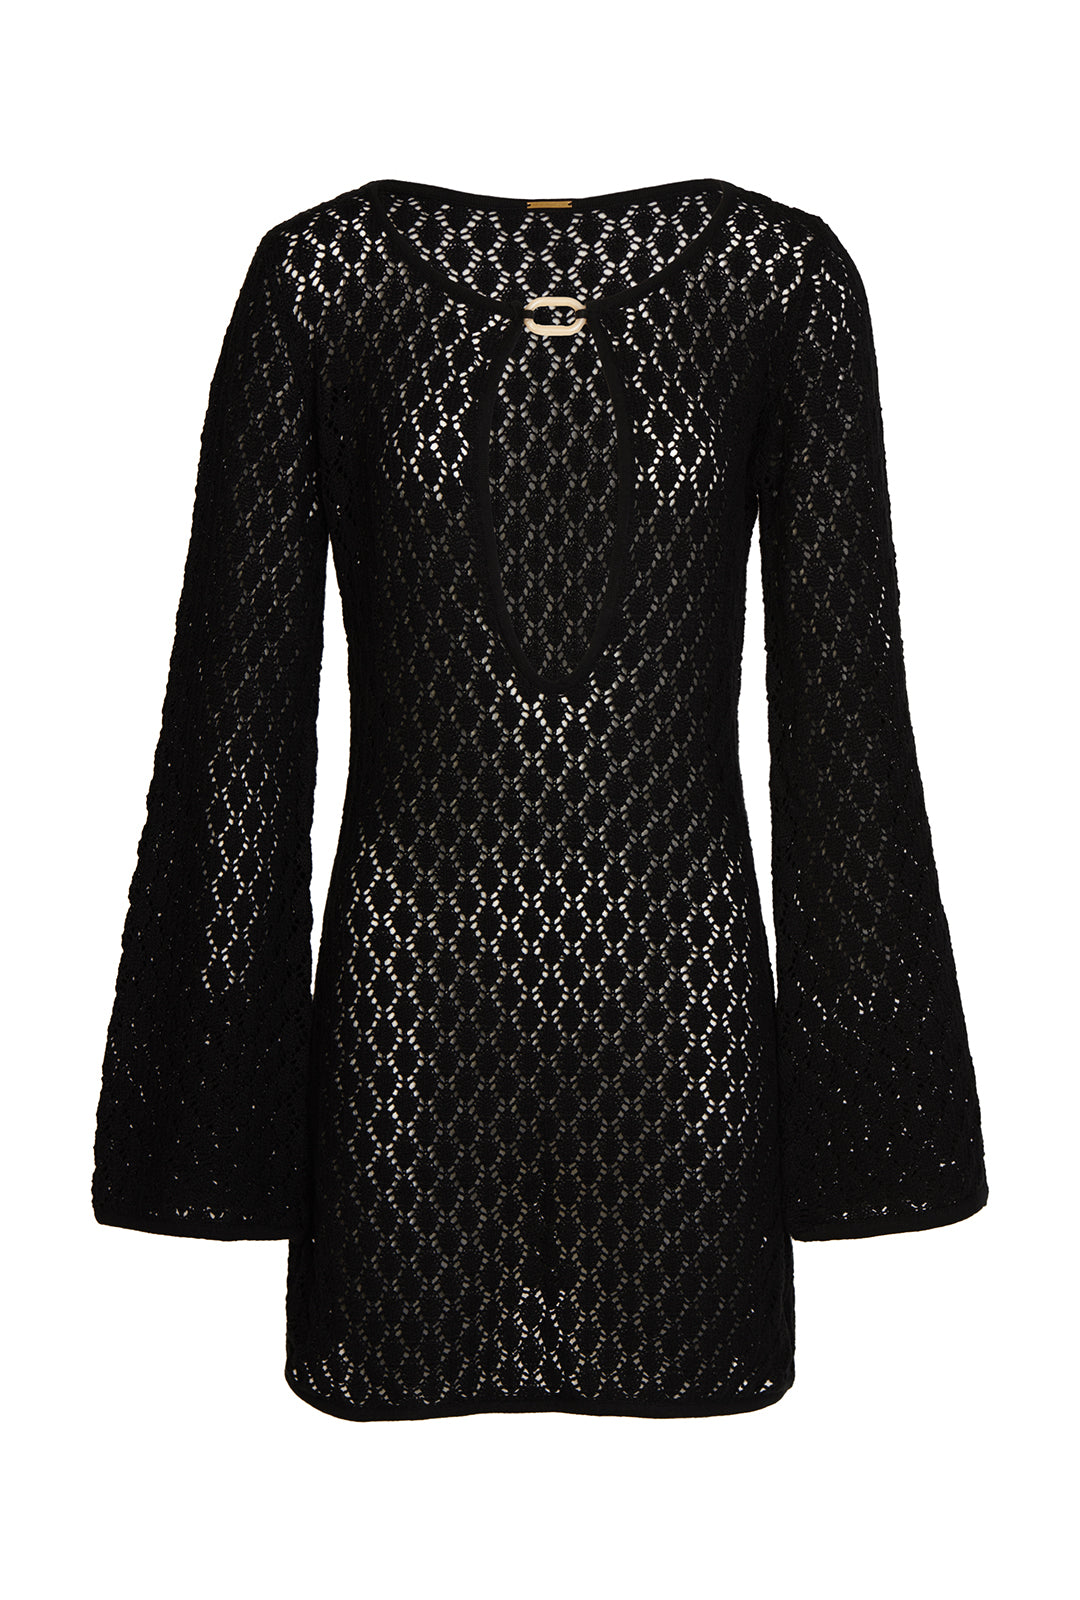 Bimini Crochet Dress - Black